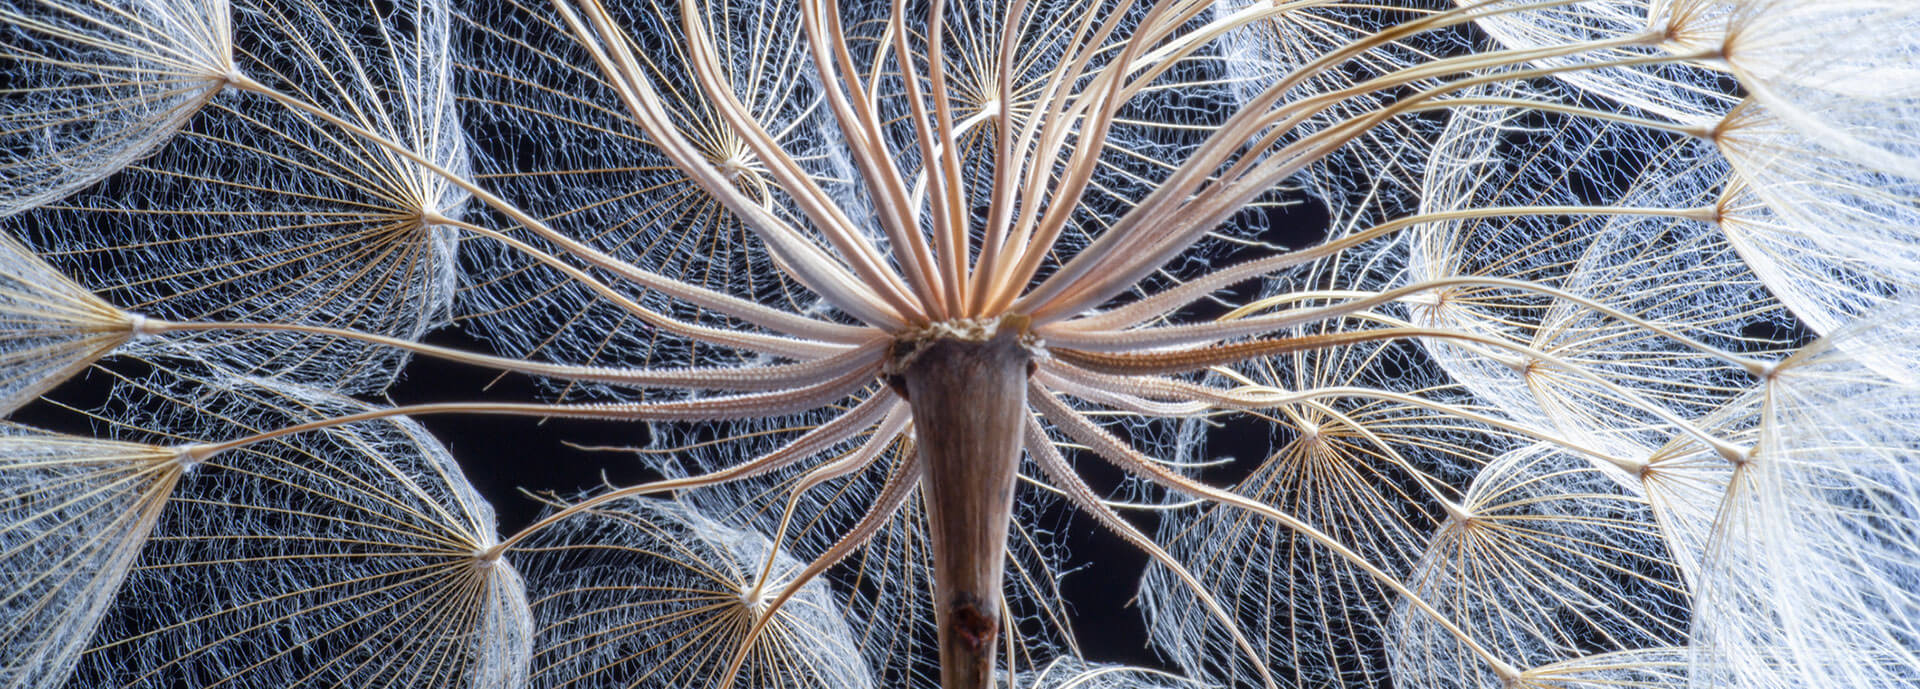 Close-up inside a dandelion head